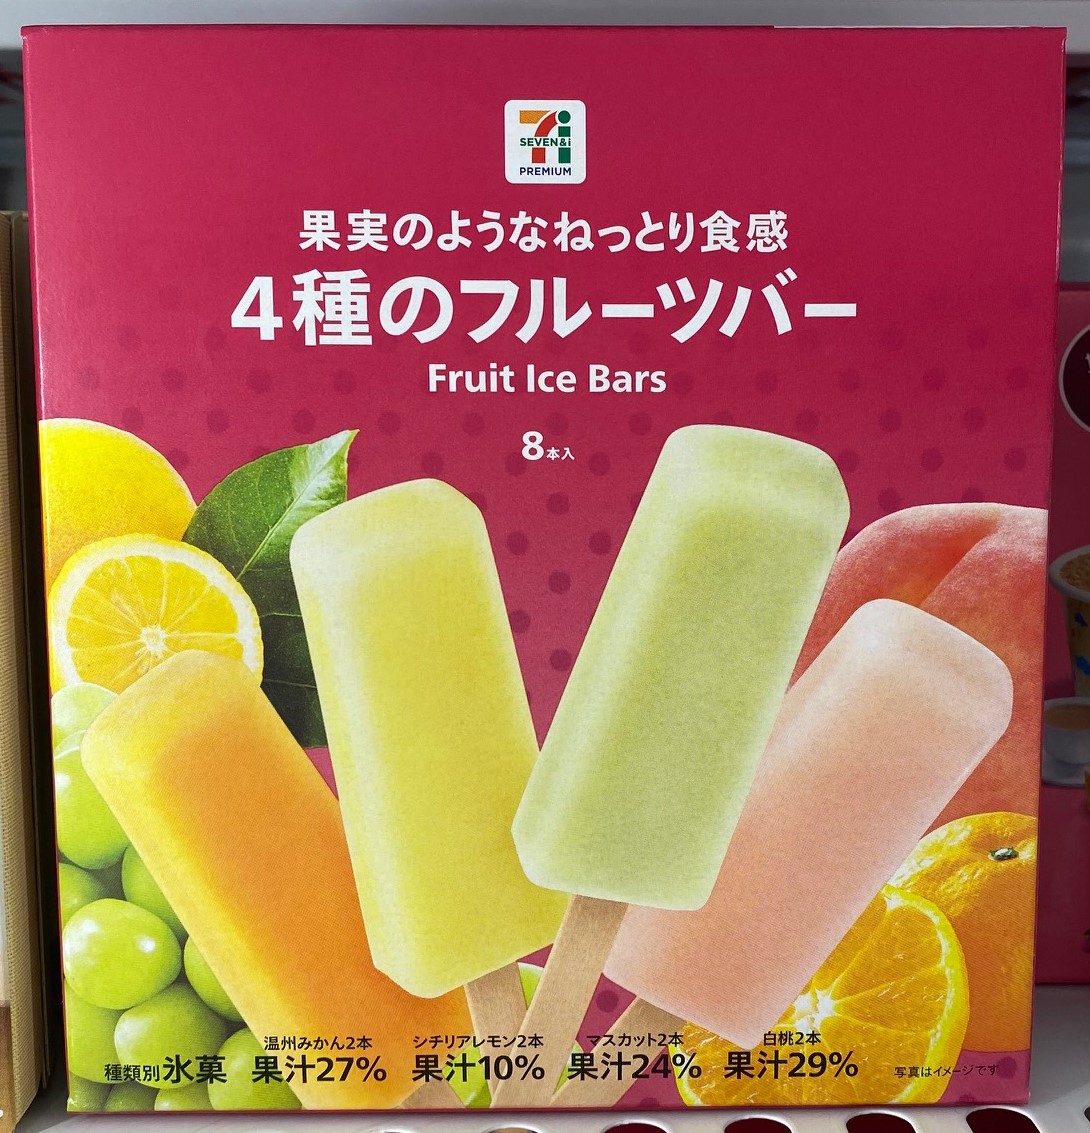 7-11 Fruit Ice Bars